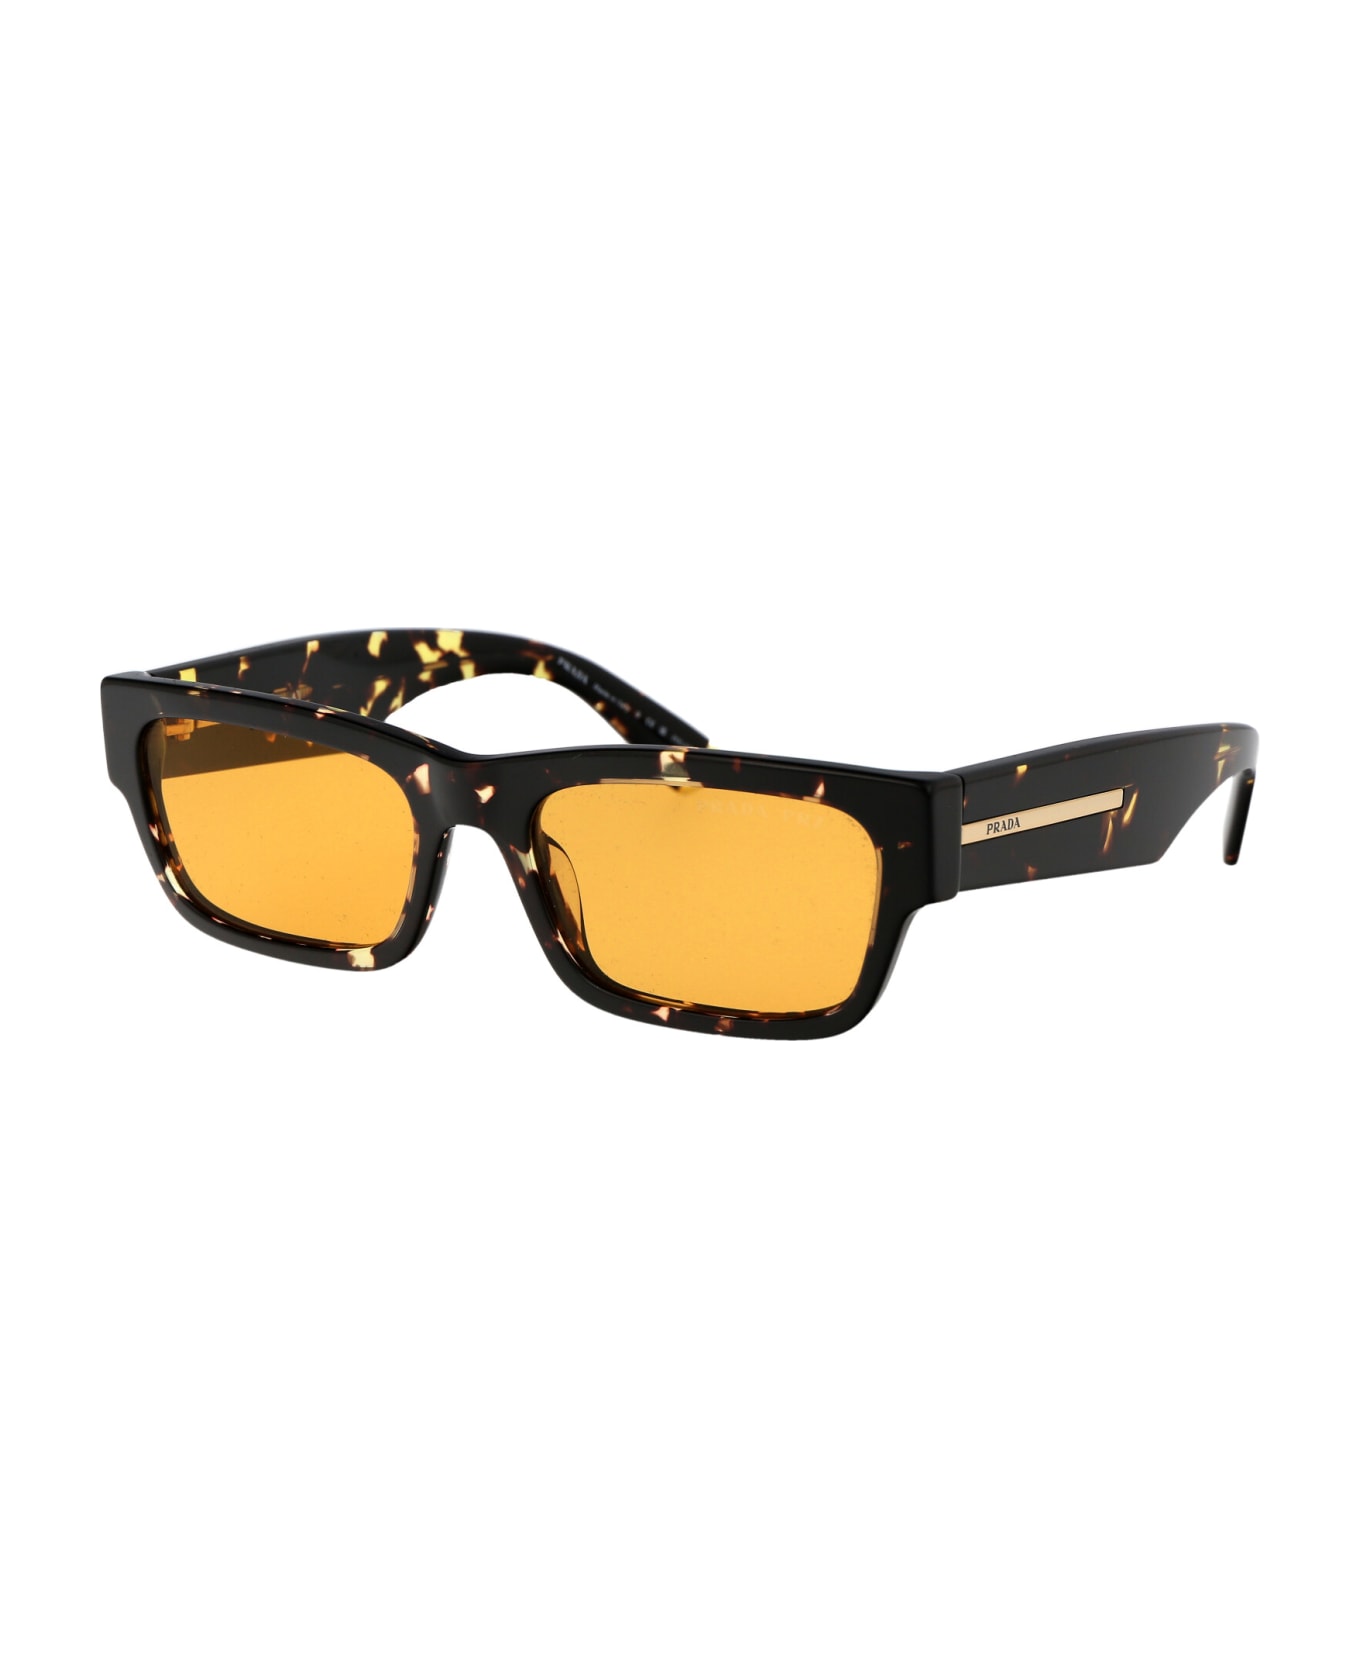 Prada Eyewear 0pr A03s Sunglasses - 16O20C Havana Black/Yellow